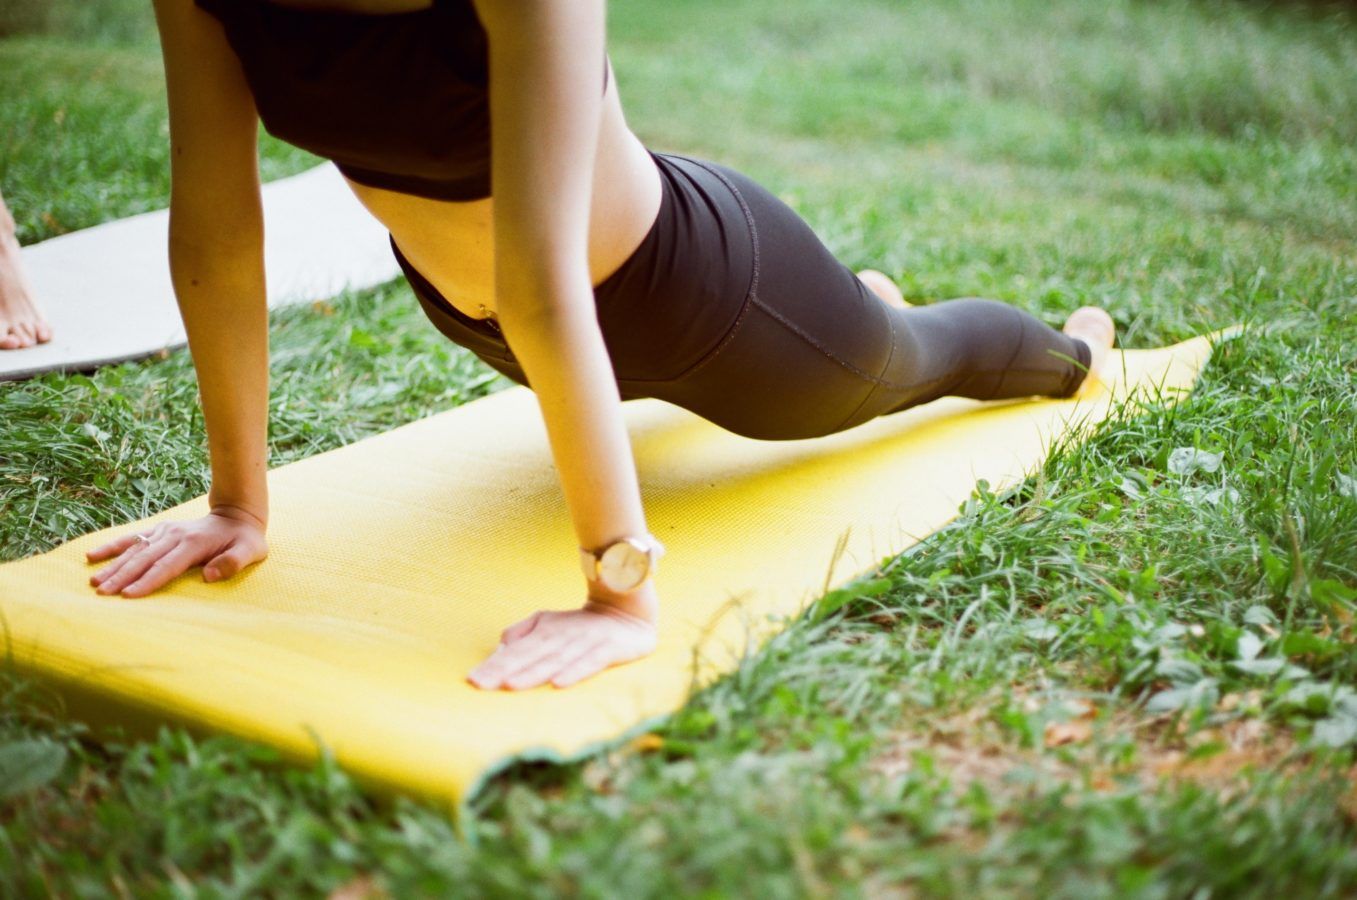 Easy Modifications to Make Yoga More Comfortable